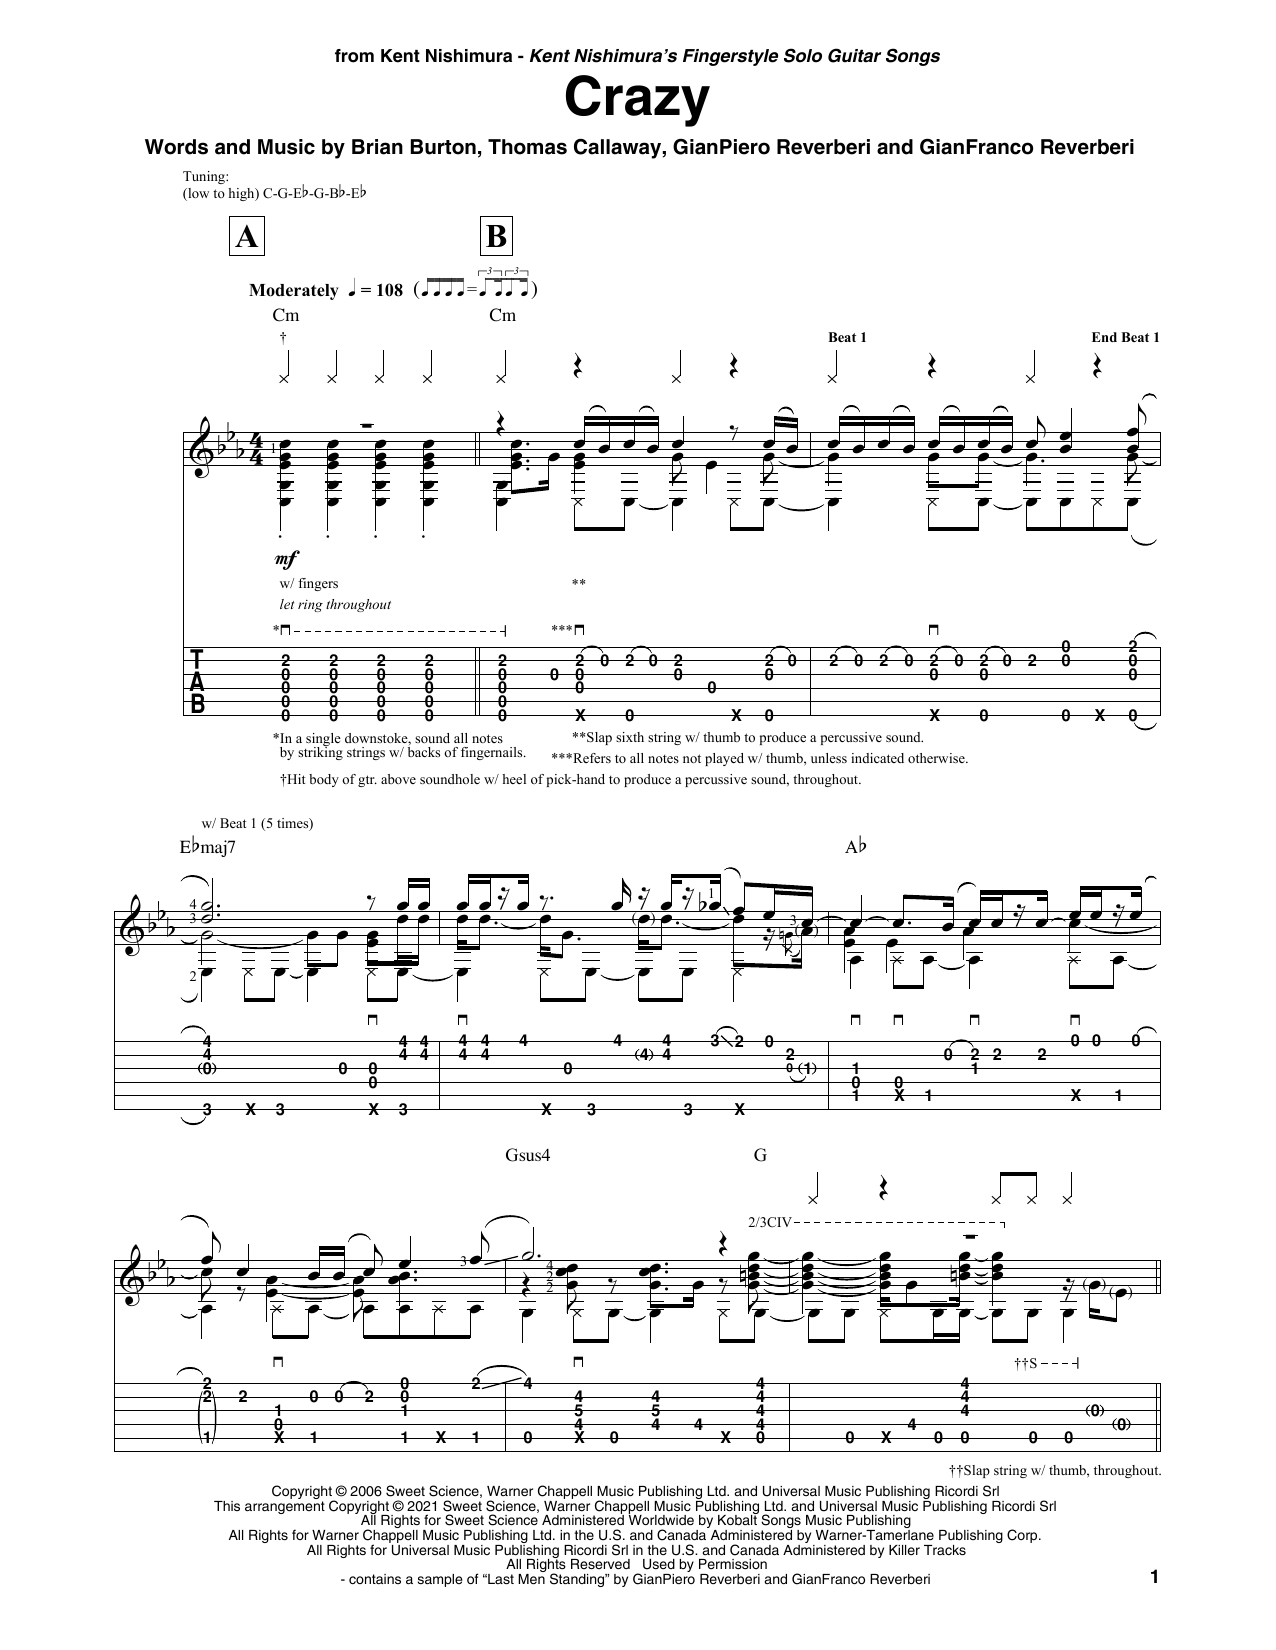 Gnarls Barkley Crazy (arr. Kent Nishimura) Sheet Music Notes & Chords for Solo Guitar - Download or Print PDF